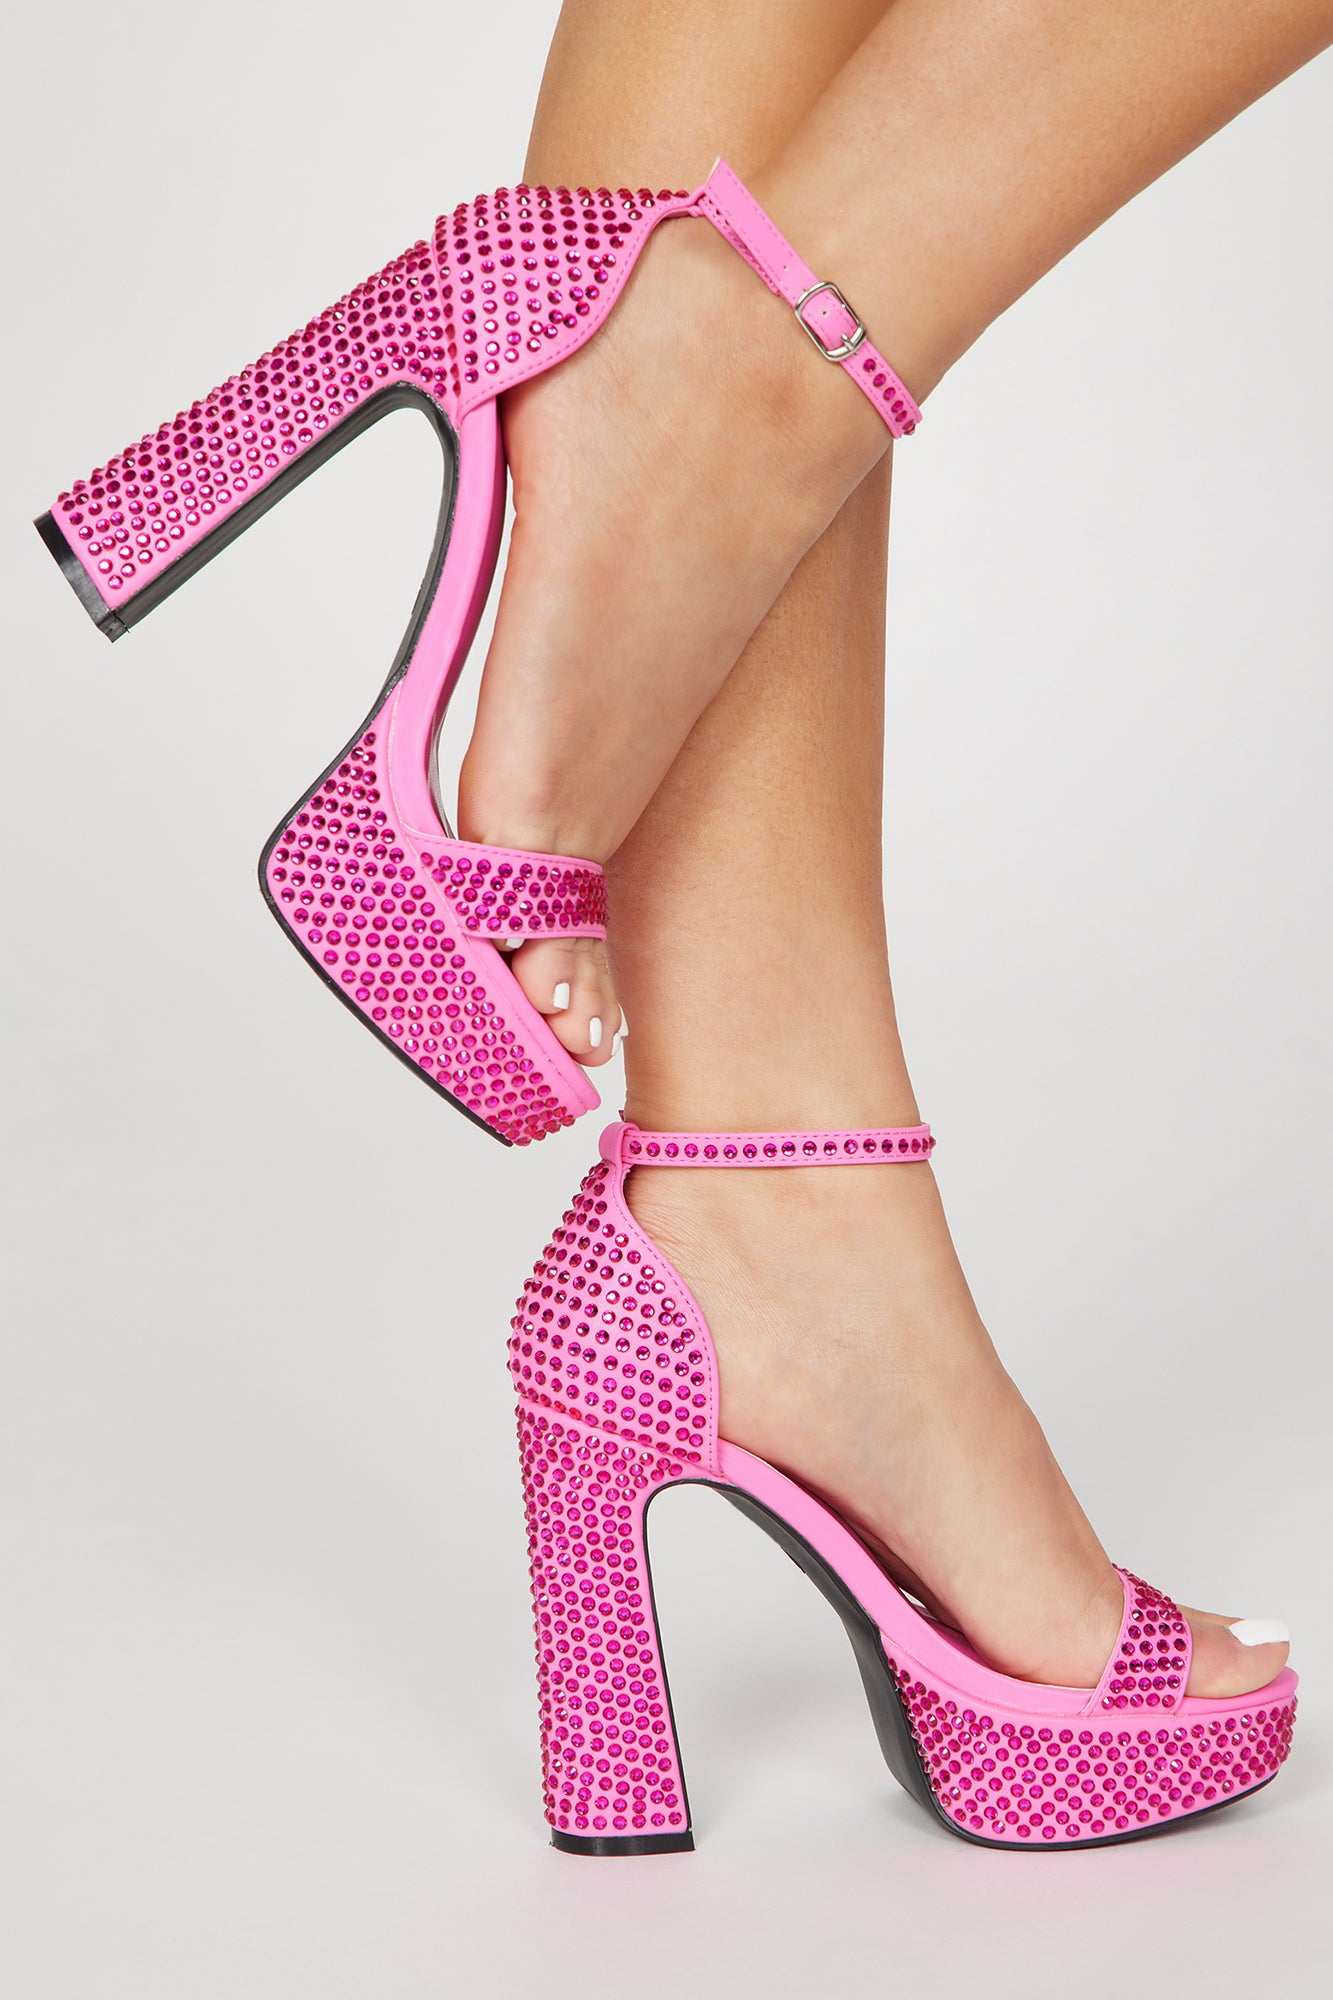 Jessica Simpson Women's Winifield Embellished High-Heel Sandals - Macy's